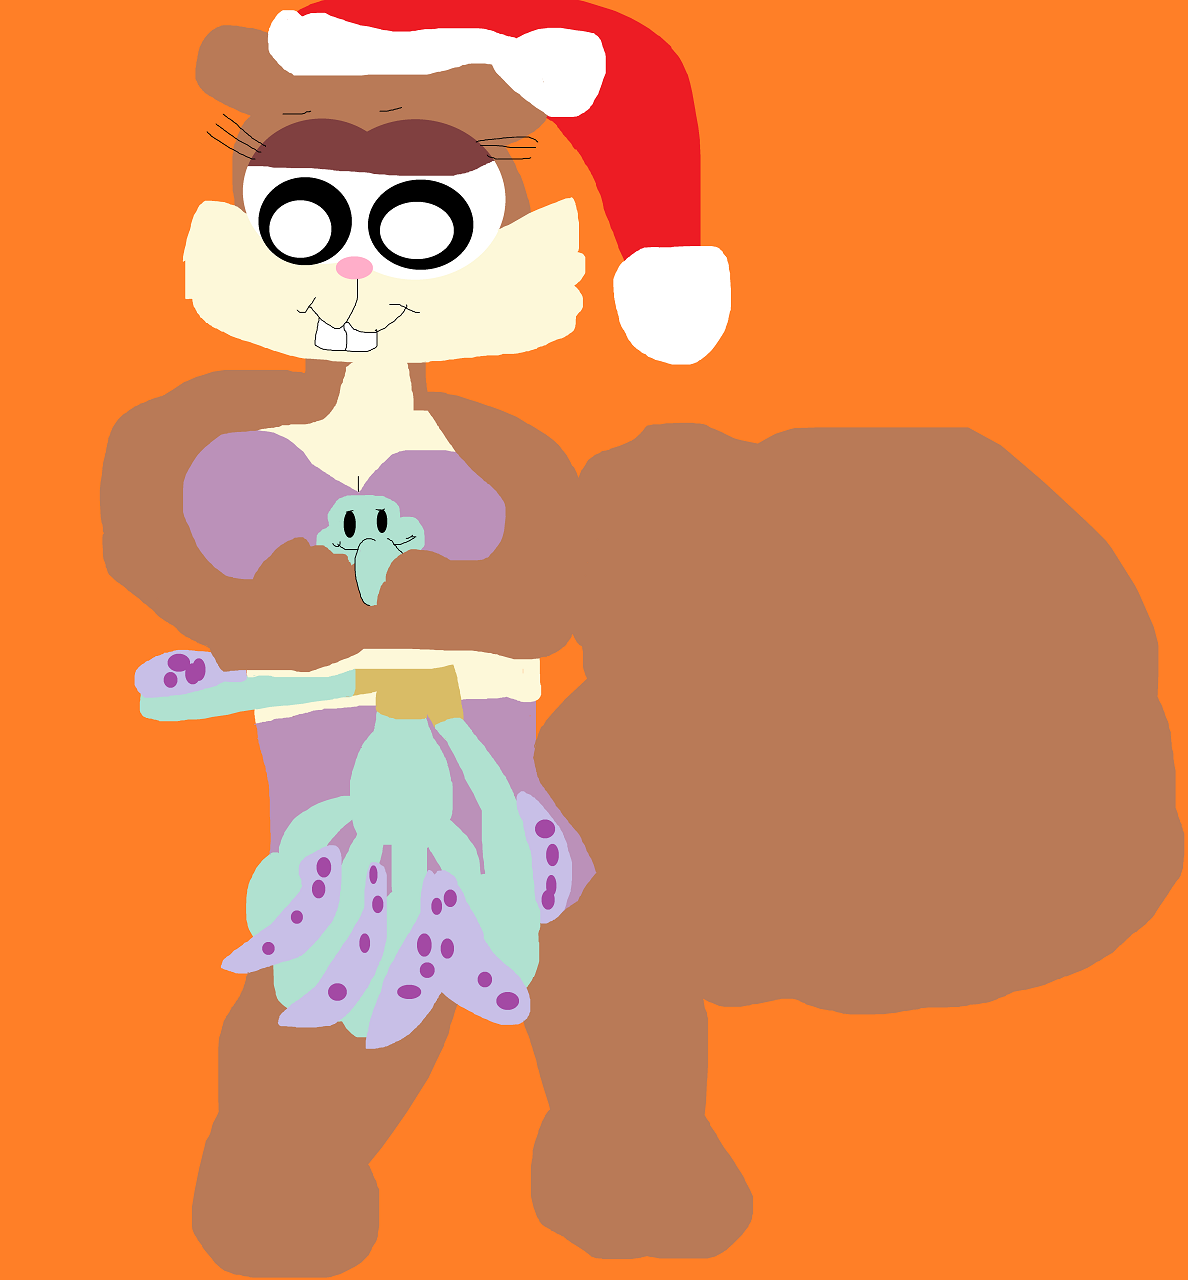 Sandy Got A Squidward Plushie For Christmas by Falconlobo